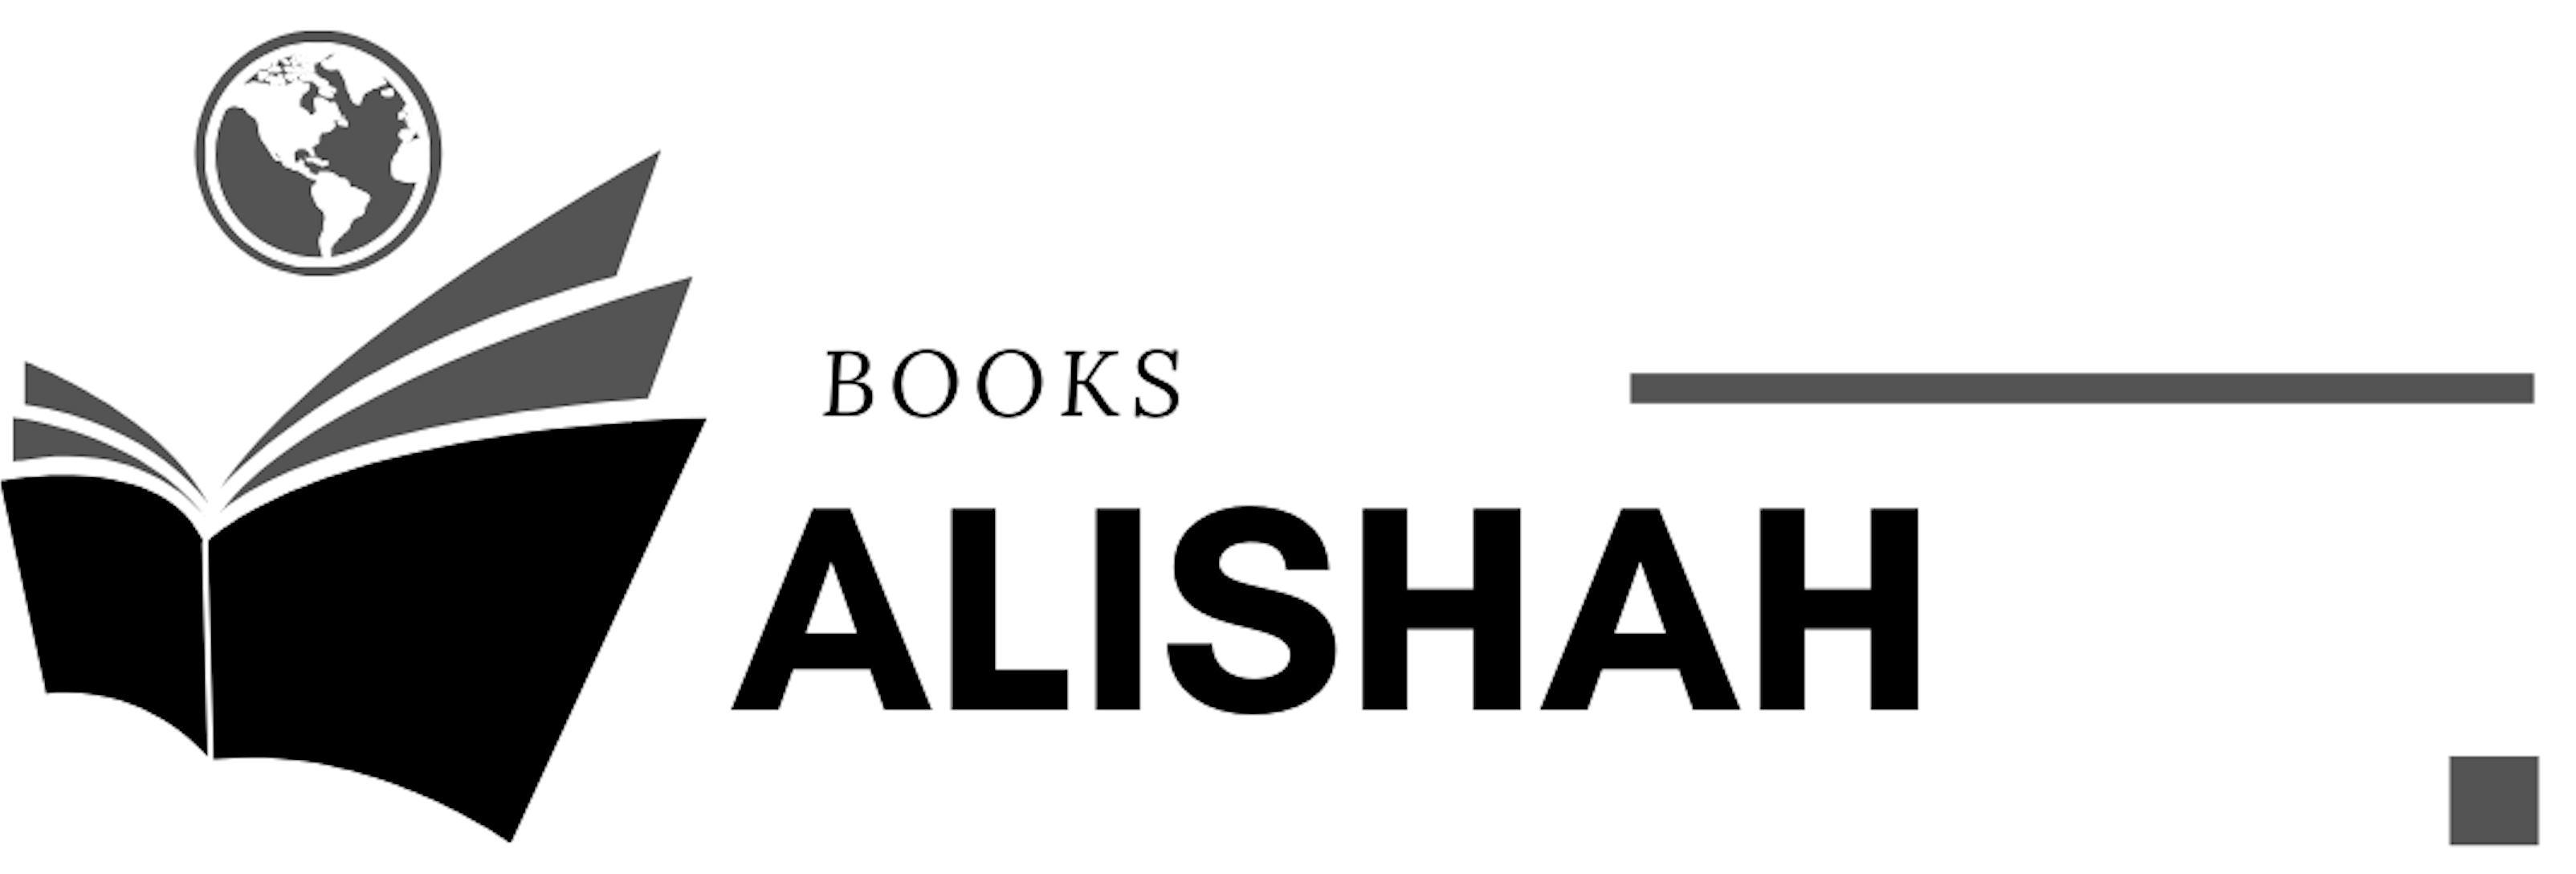 Ali Shah Books